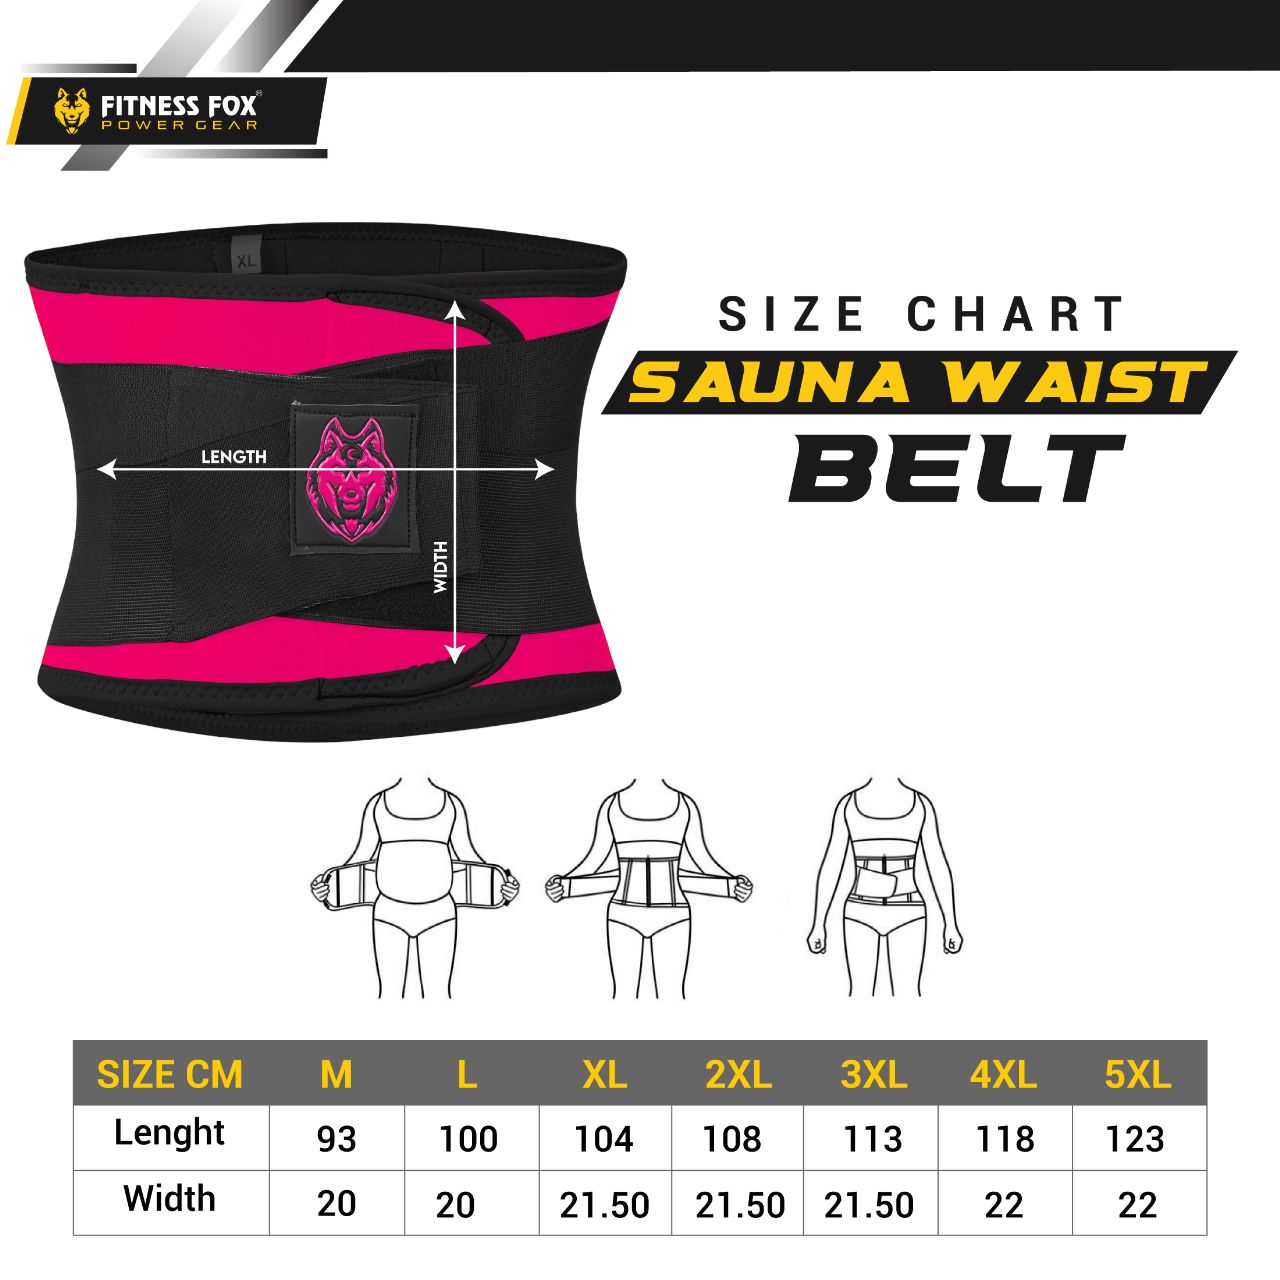 FITNESS FOX Sweat Waist Trainer Belt For Women and Men